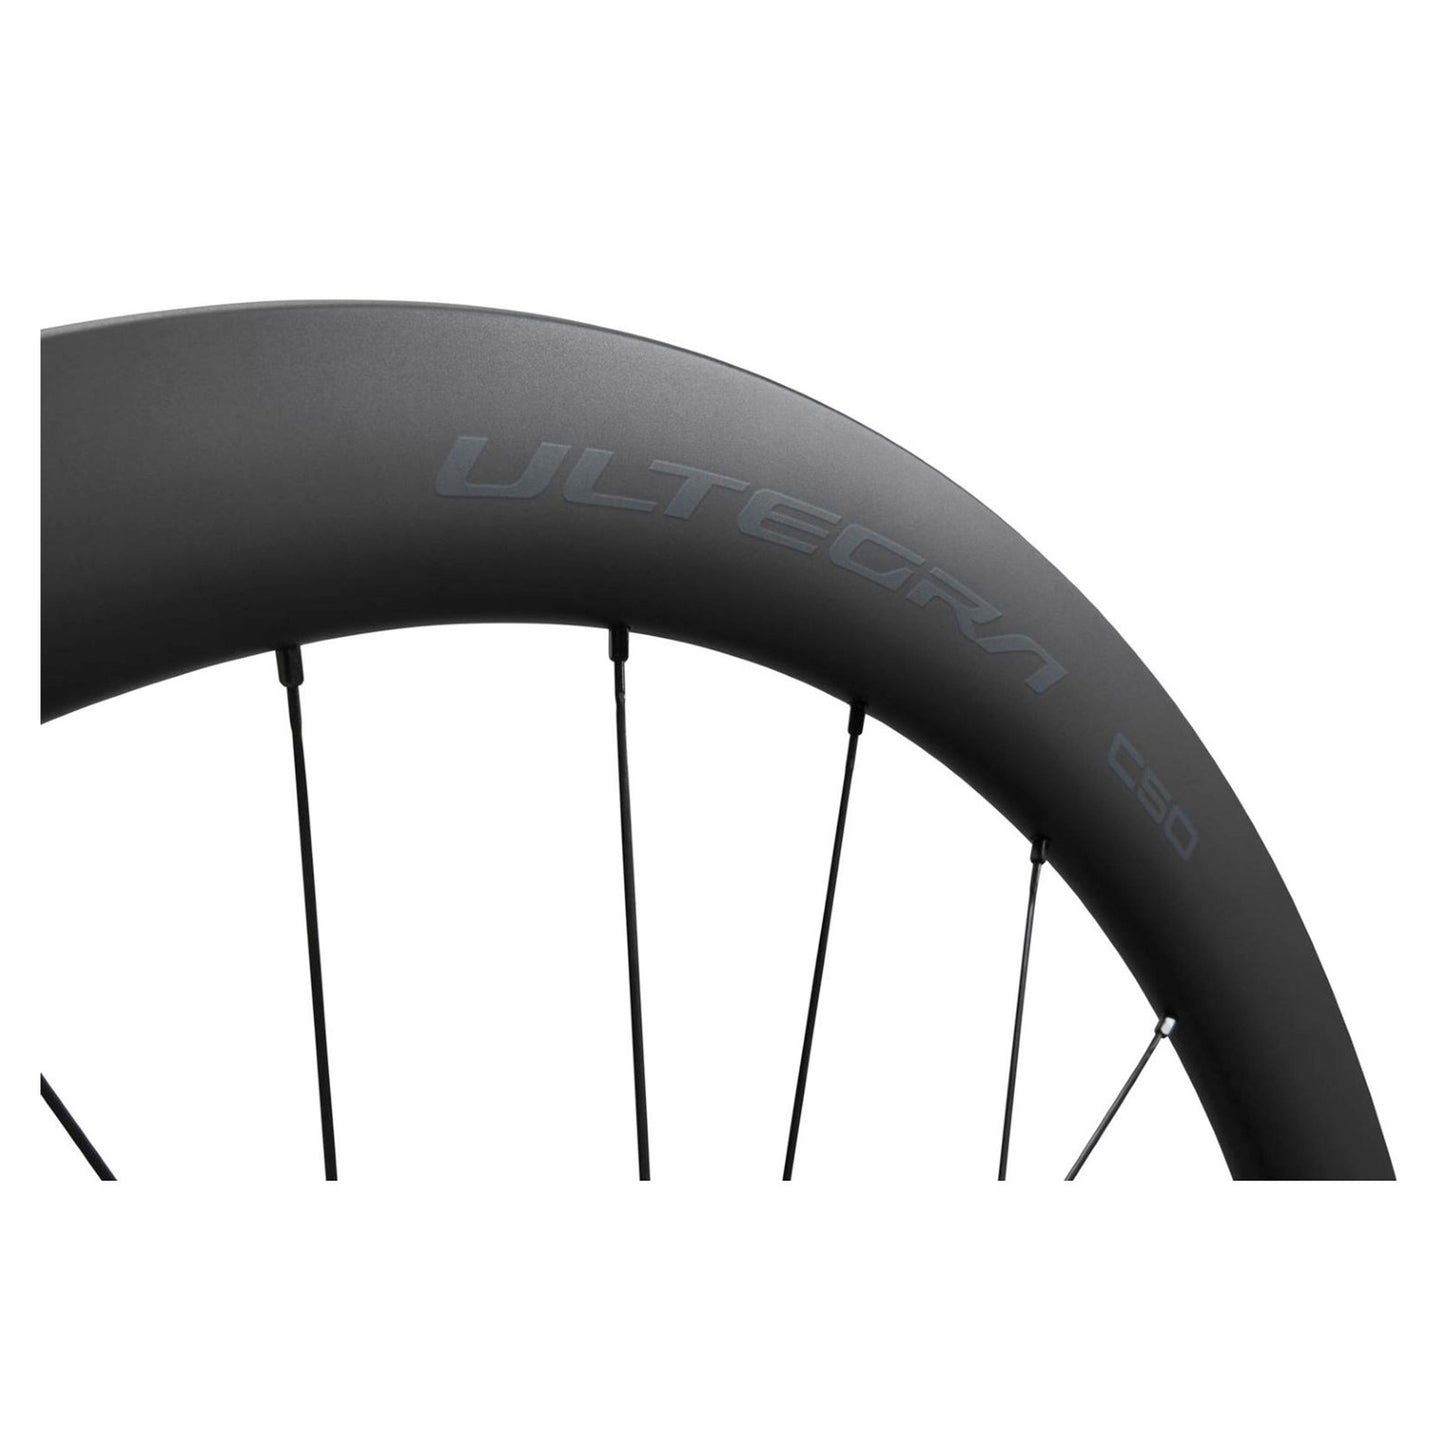 Shimano Ultegra R8170 C50 Carbon CL Disc Wheelset